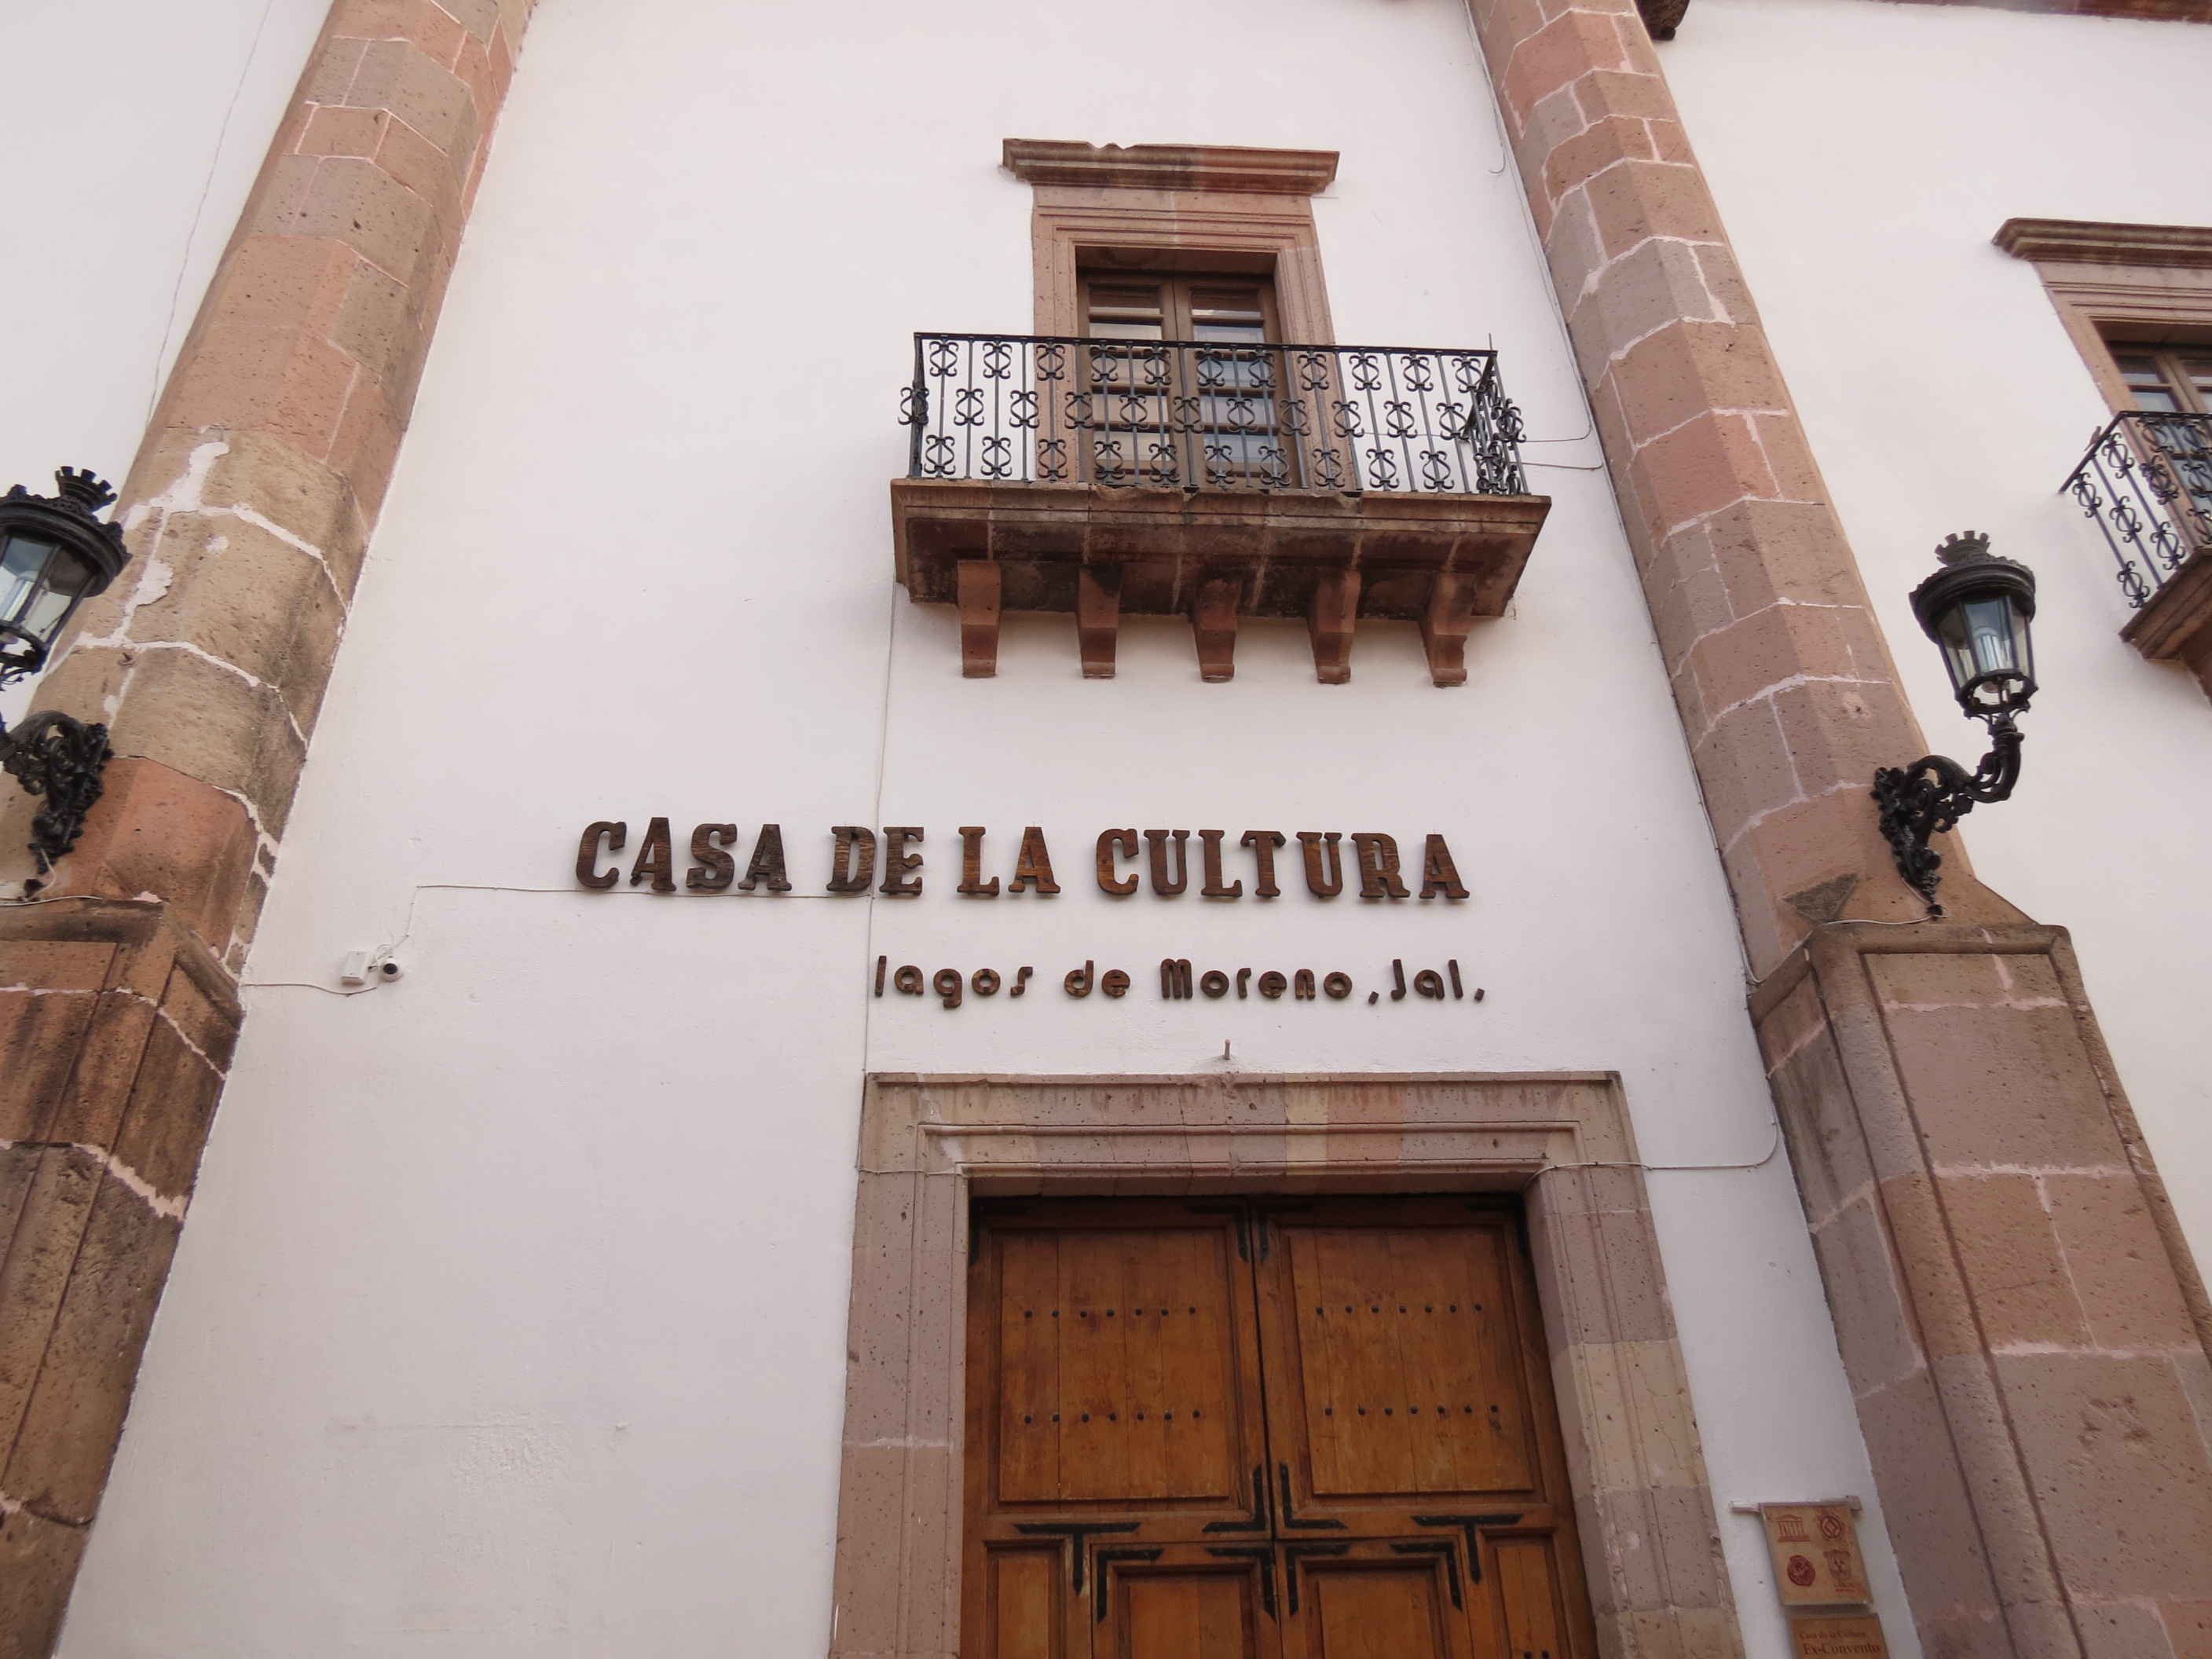 La Casa de la Cultura de Moreno.